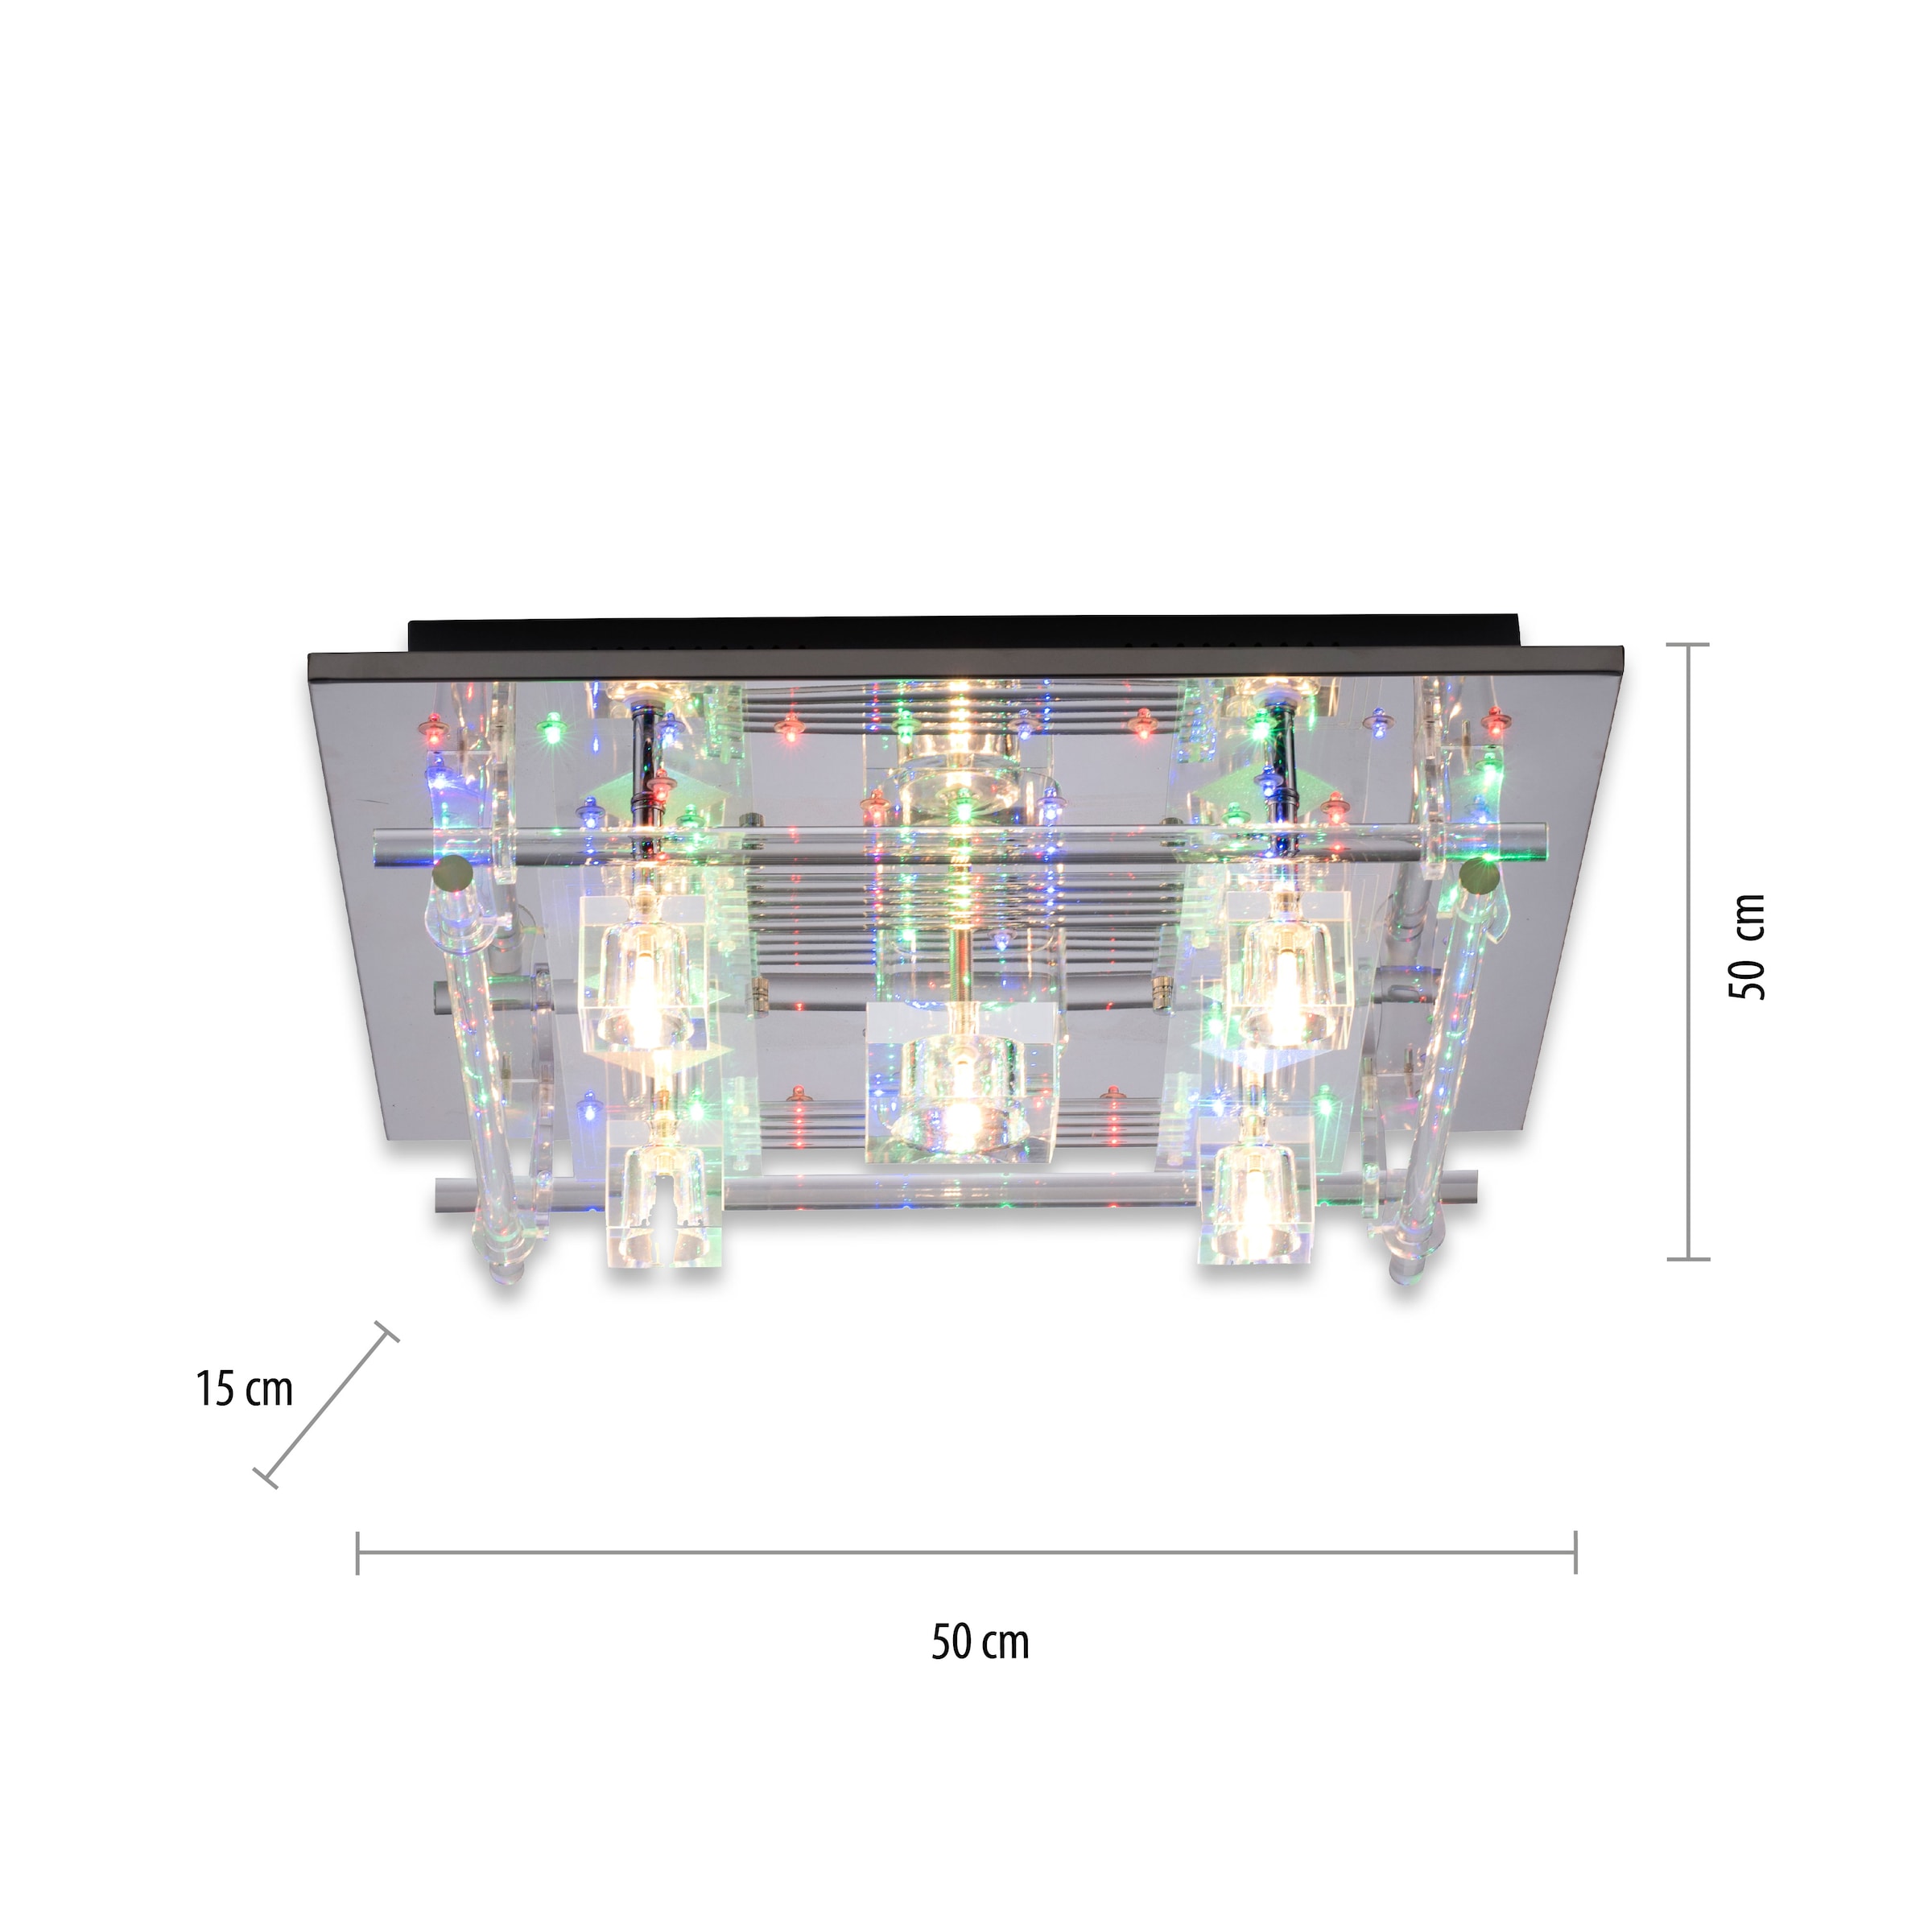 JUST LIGHT Deckenleuchte »KEMAL2.0«, 68 flammig, Leuchtmittel G4 | LED wechselbar-LED wechselbar-LED wechselbar-LED wechselbar, LED, RGB, Fernbedienung, Infrarot inkl., separat steuerbar über FB